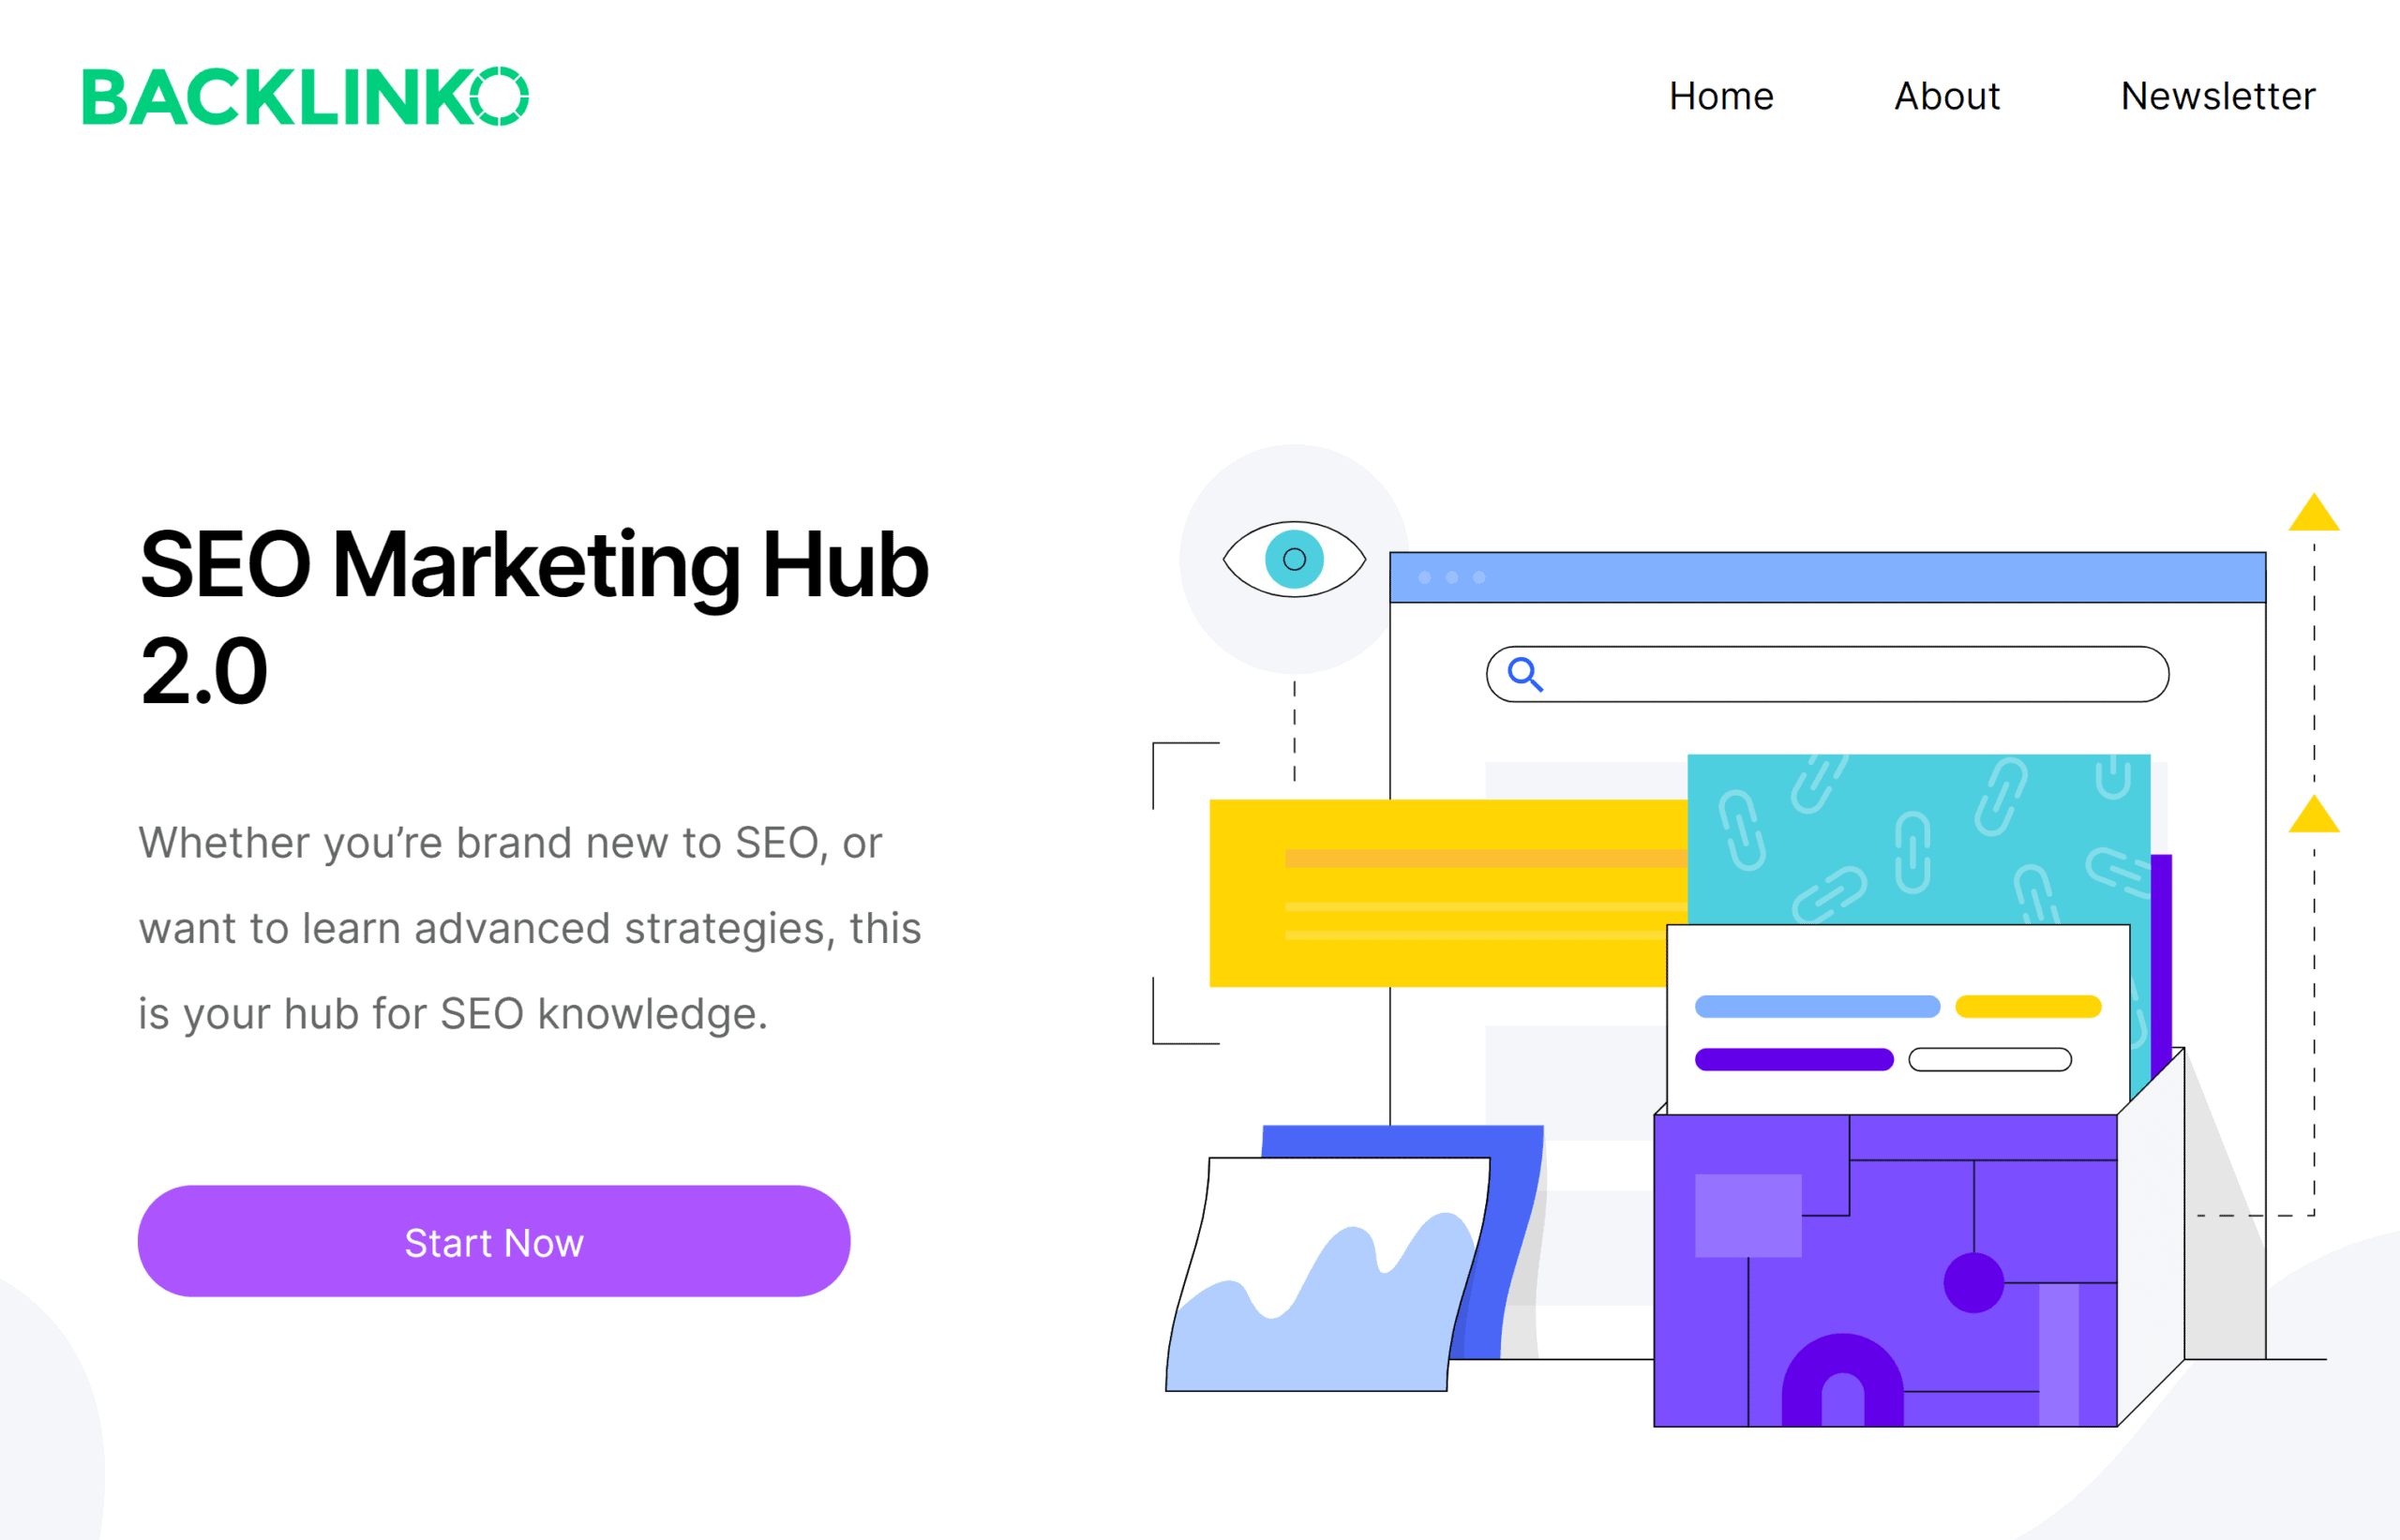 Backlinko – SEO Marketing Hub